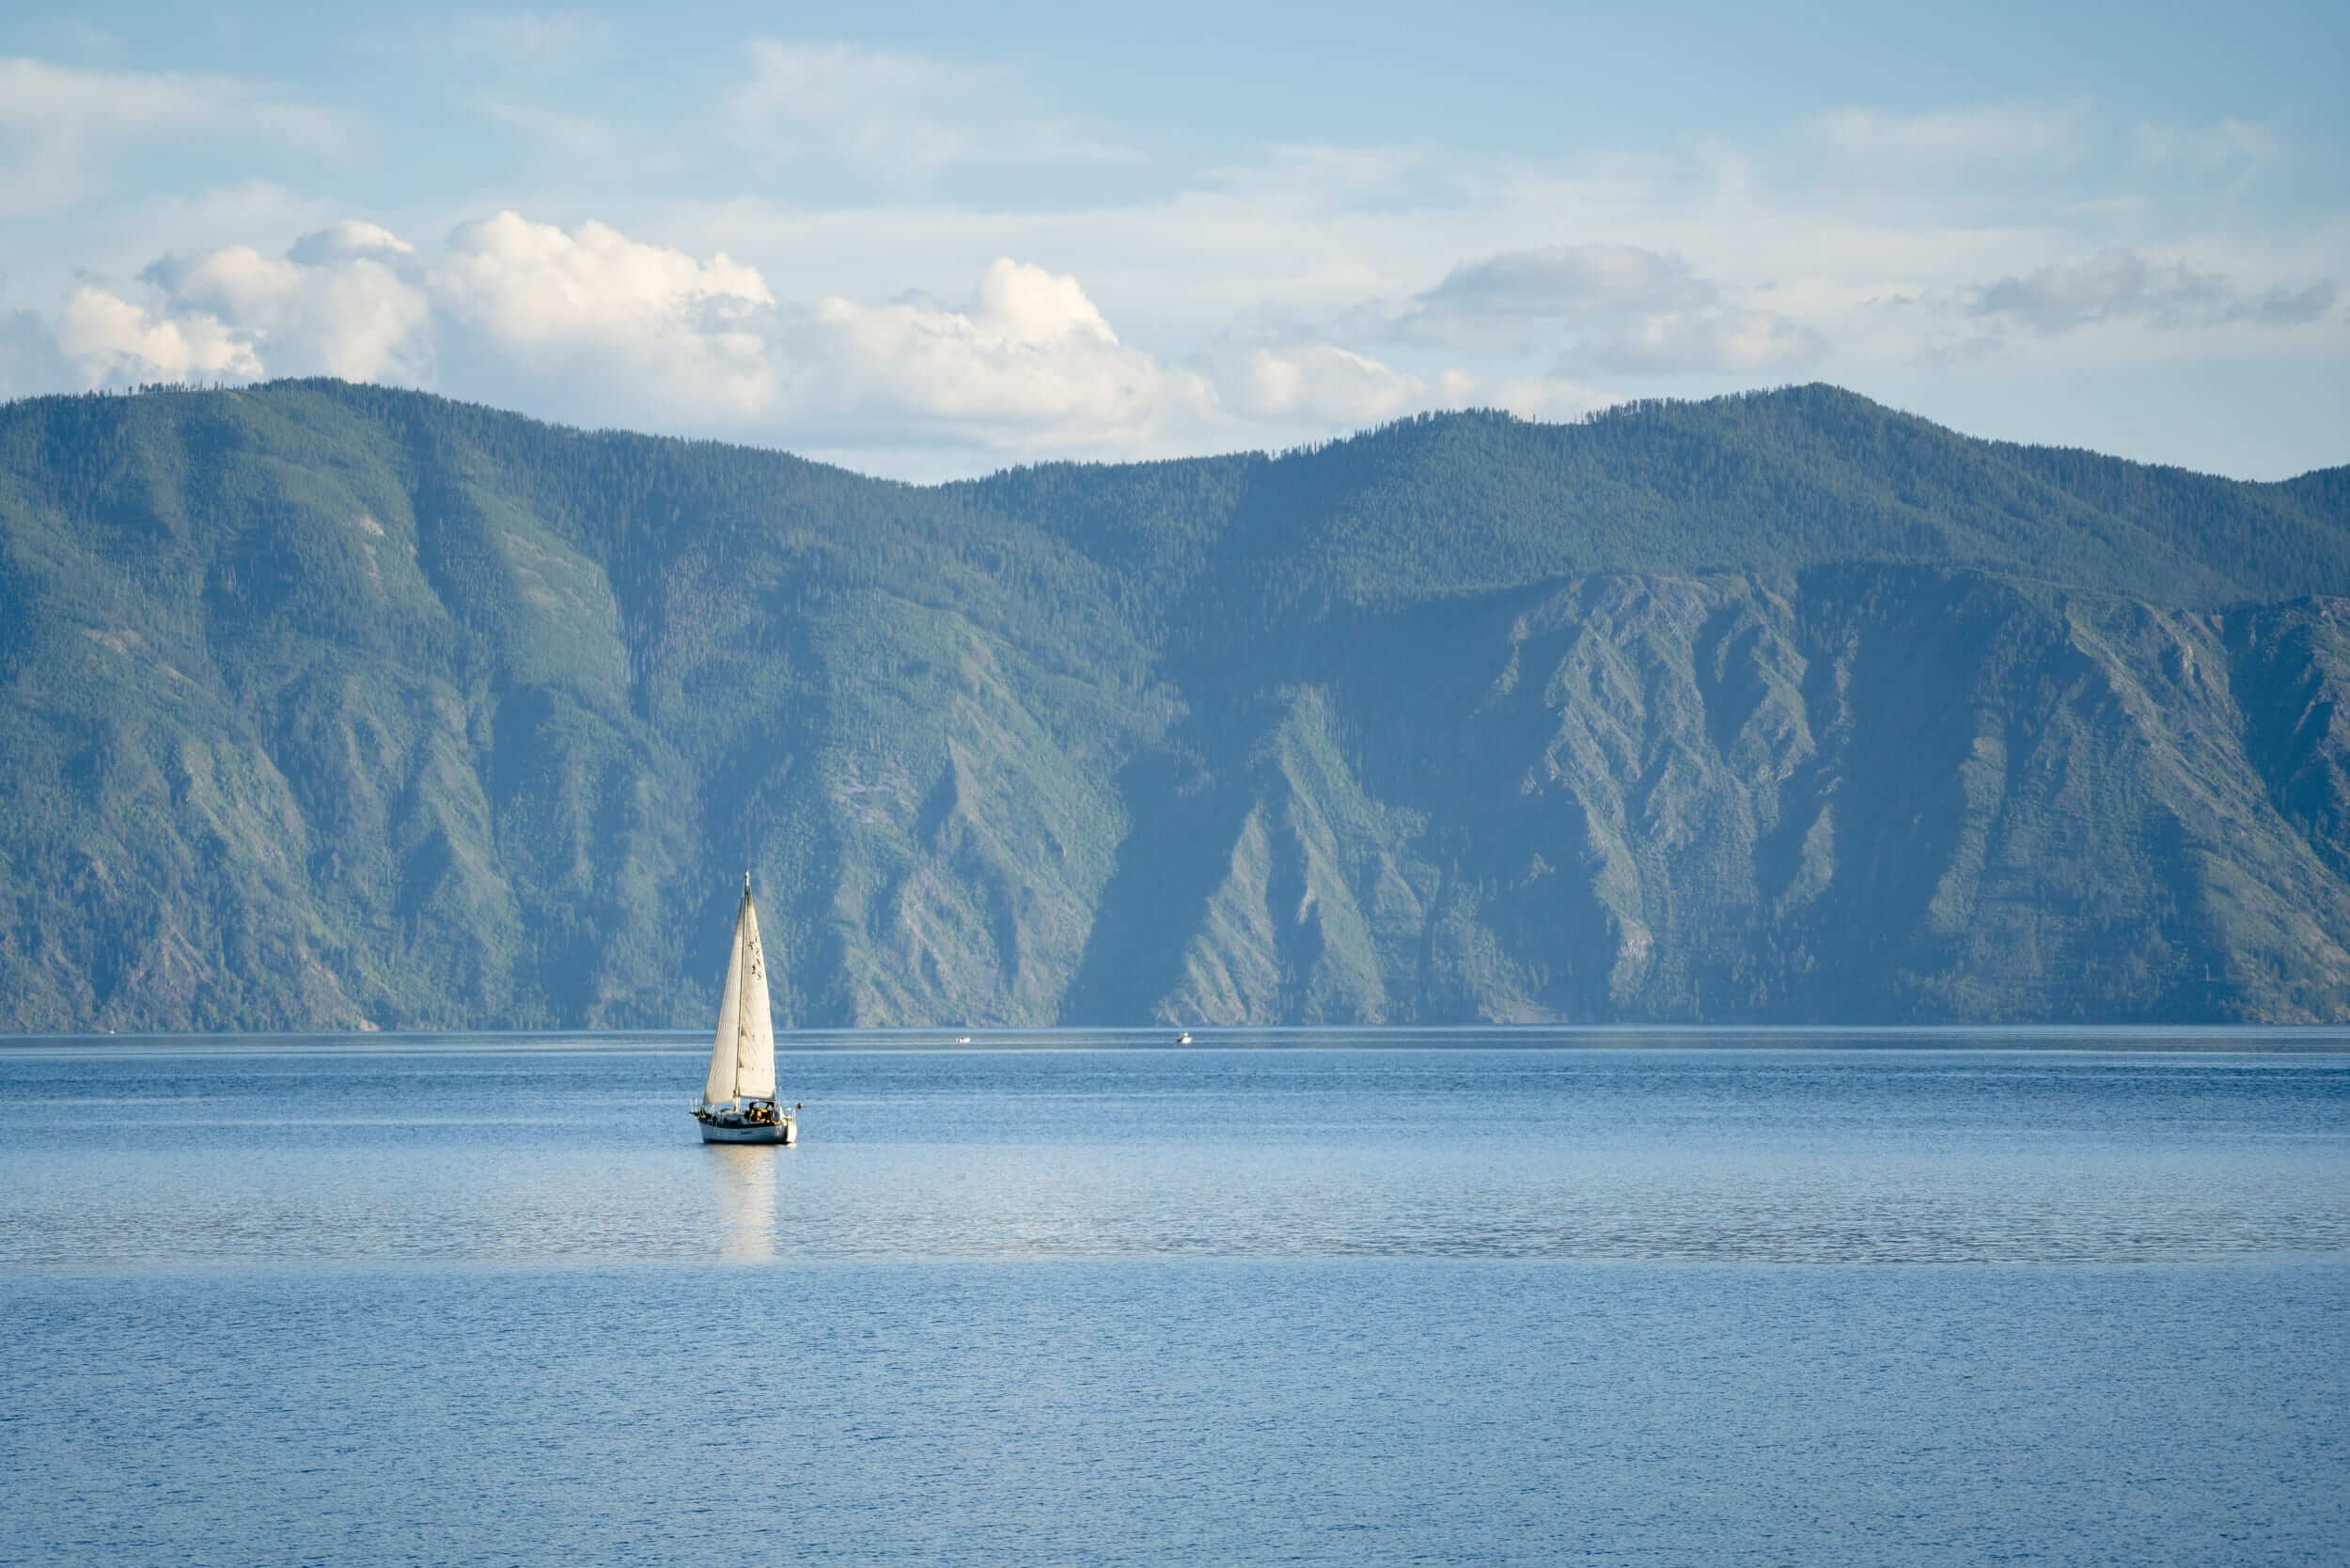 A sailboat on Lake Pend Orielle.